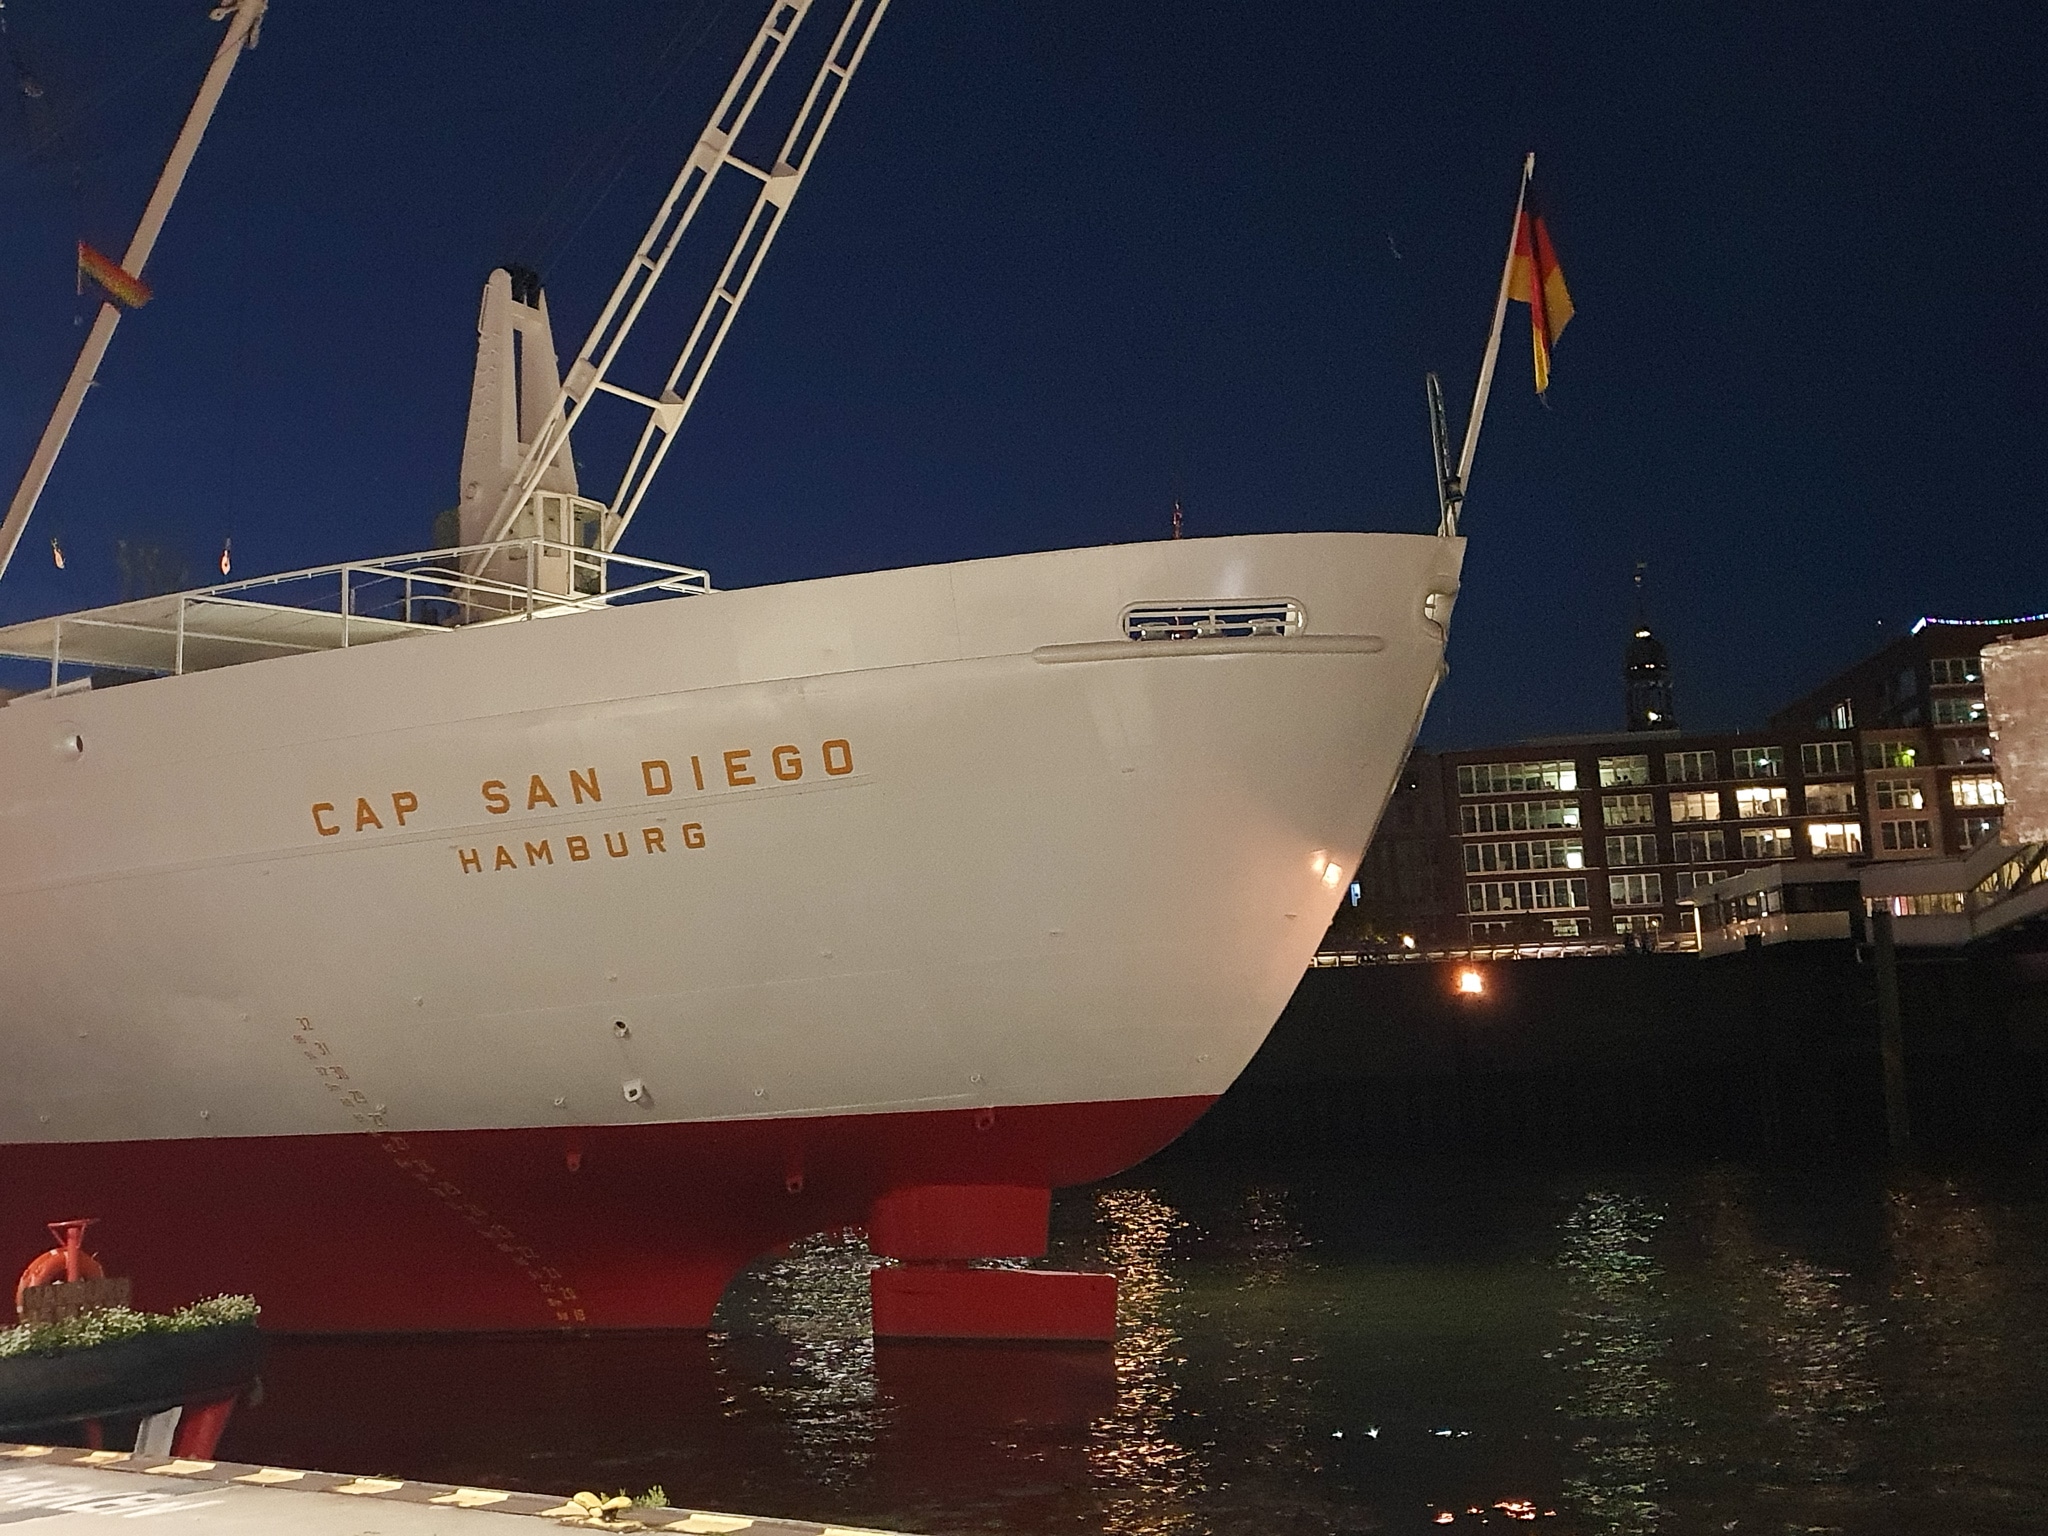 Museumsschiff Casp San Diego am Abend